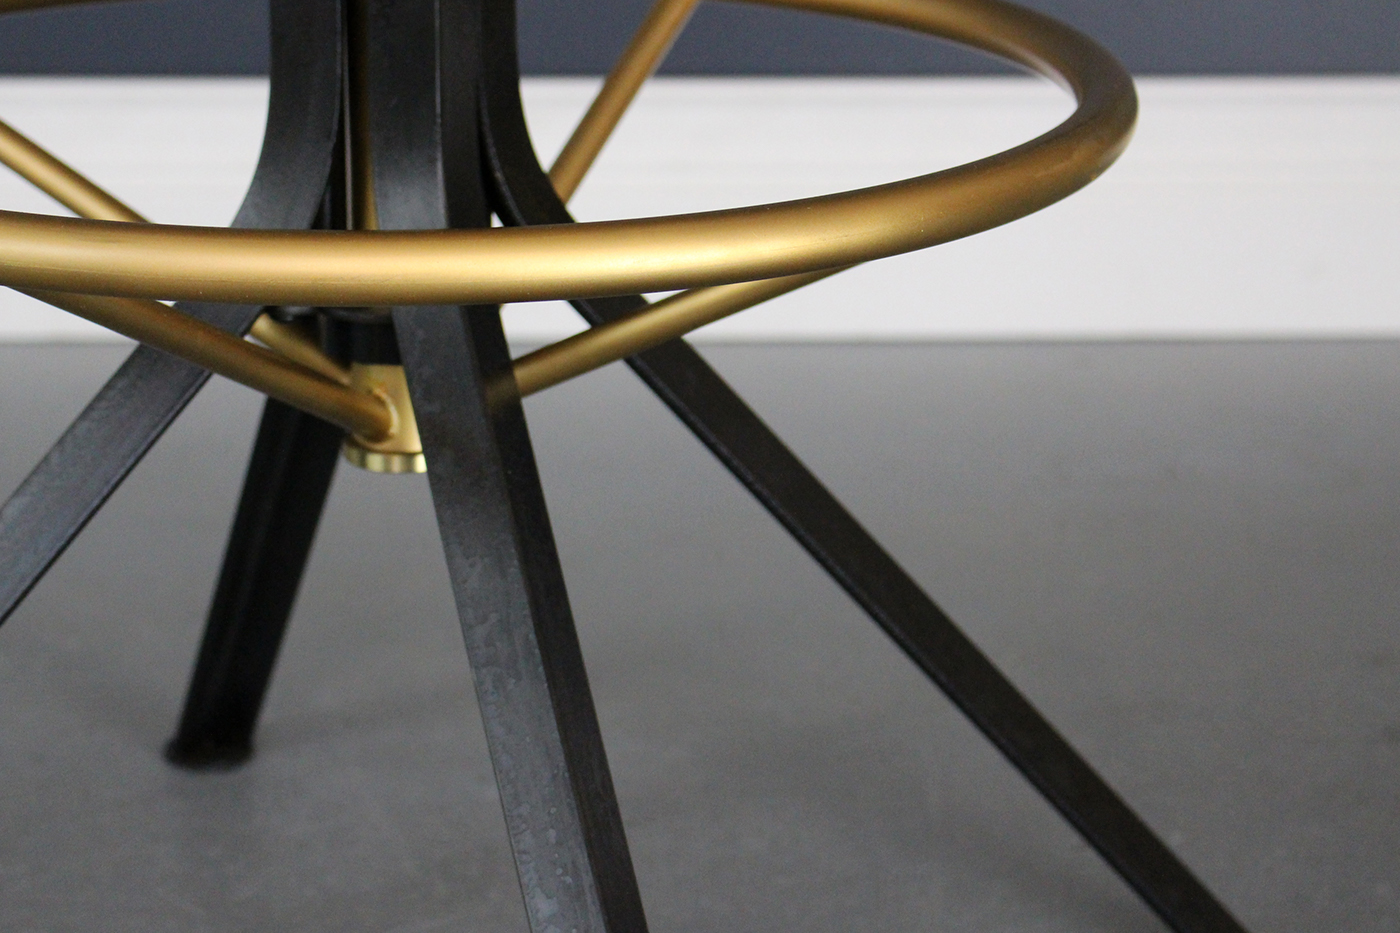 furniture table stool chair architect leather Rhode Island studio dunn